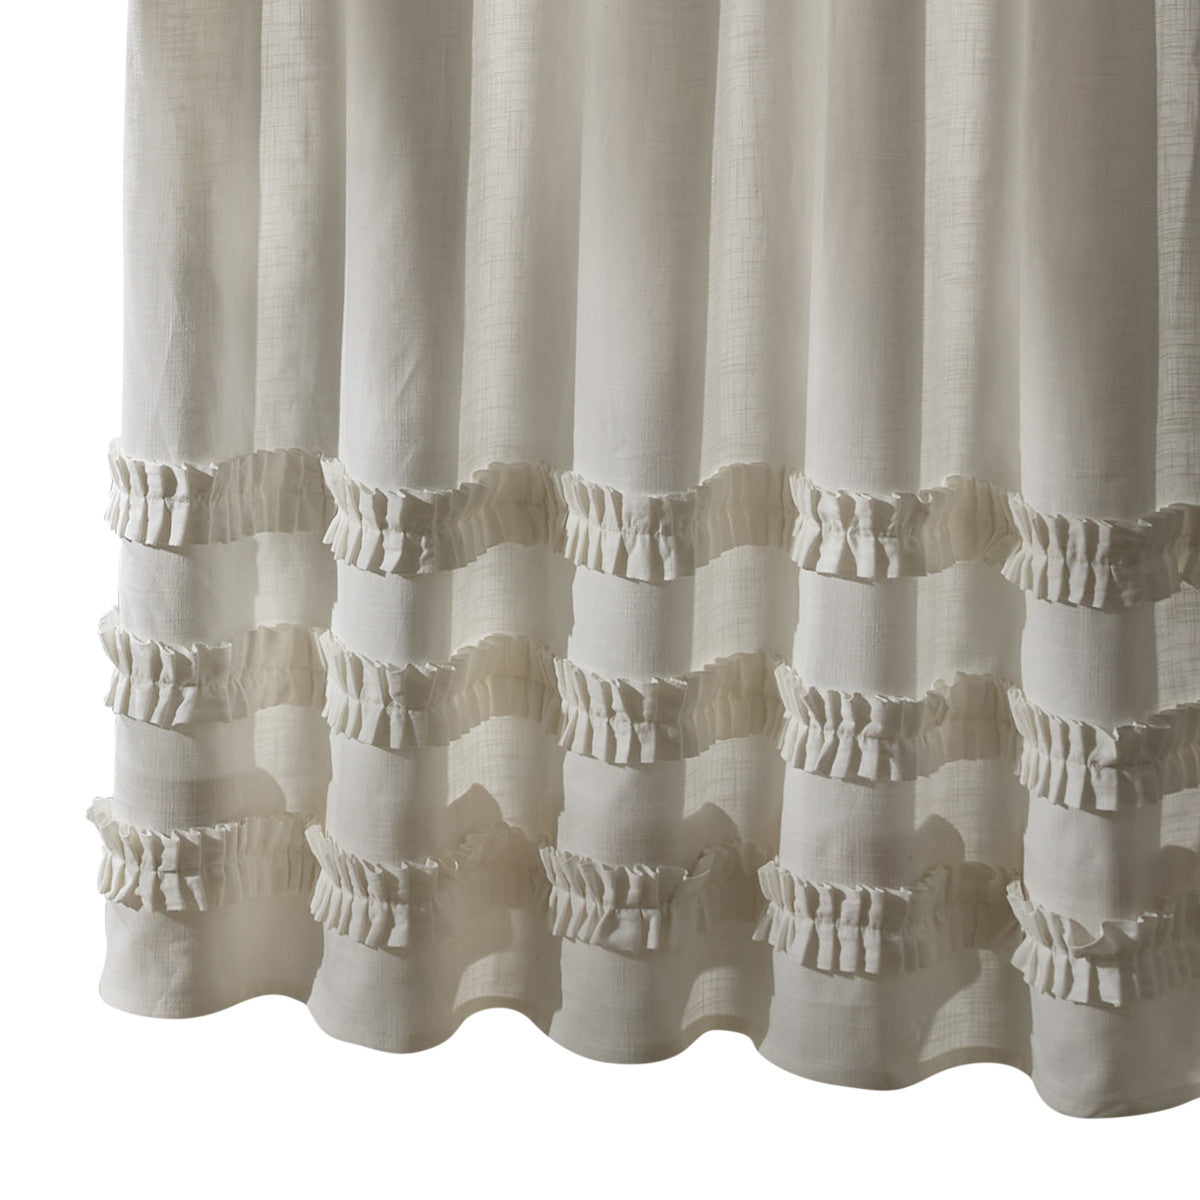 Colette Ruffle Shower Curtain - Set of 2 Park Designs